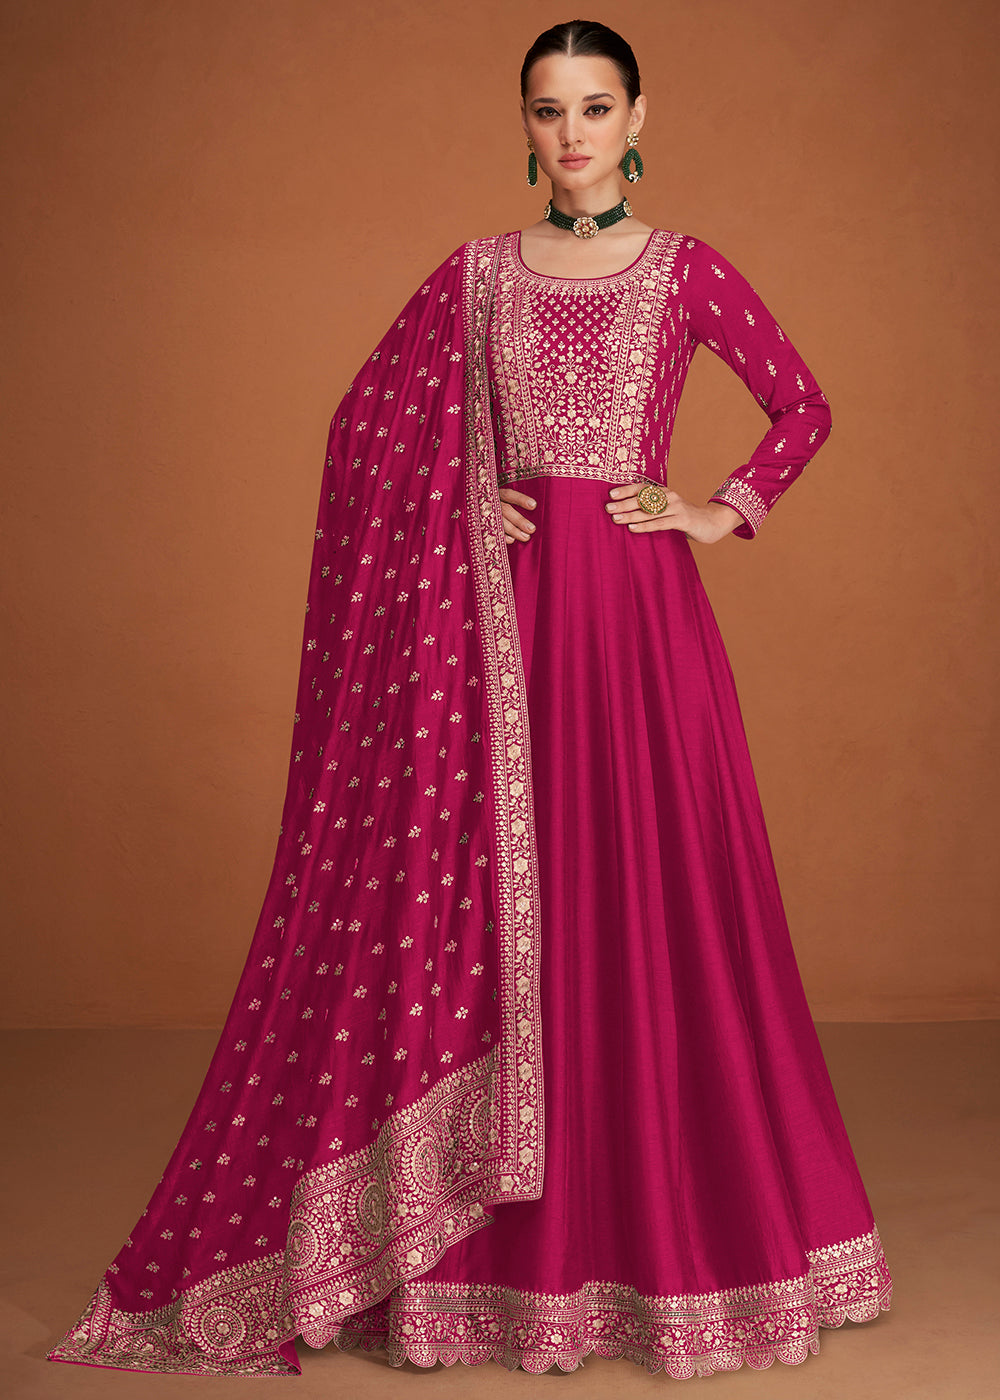 Designer Karwa Chauth Dress For Ladies | UP TO 50% OFF